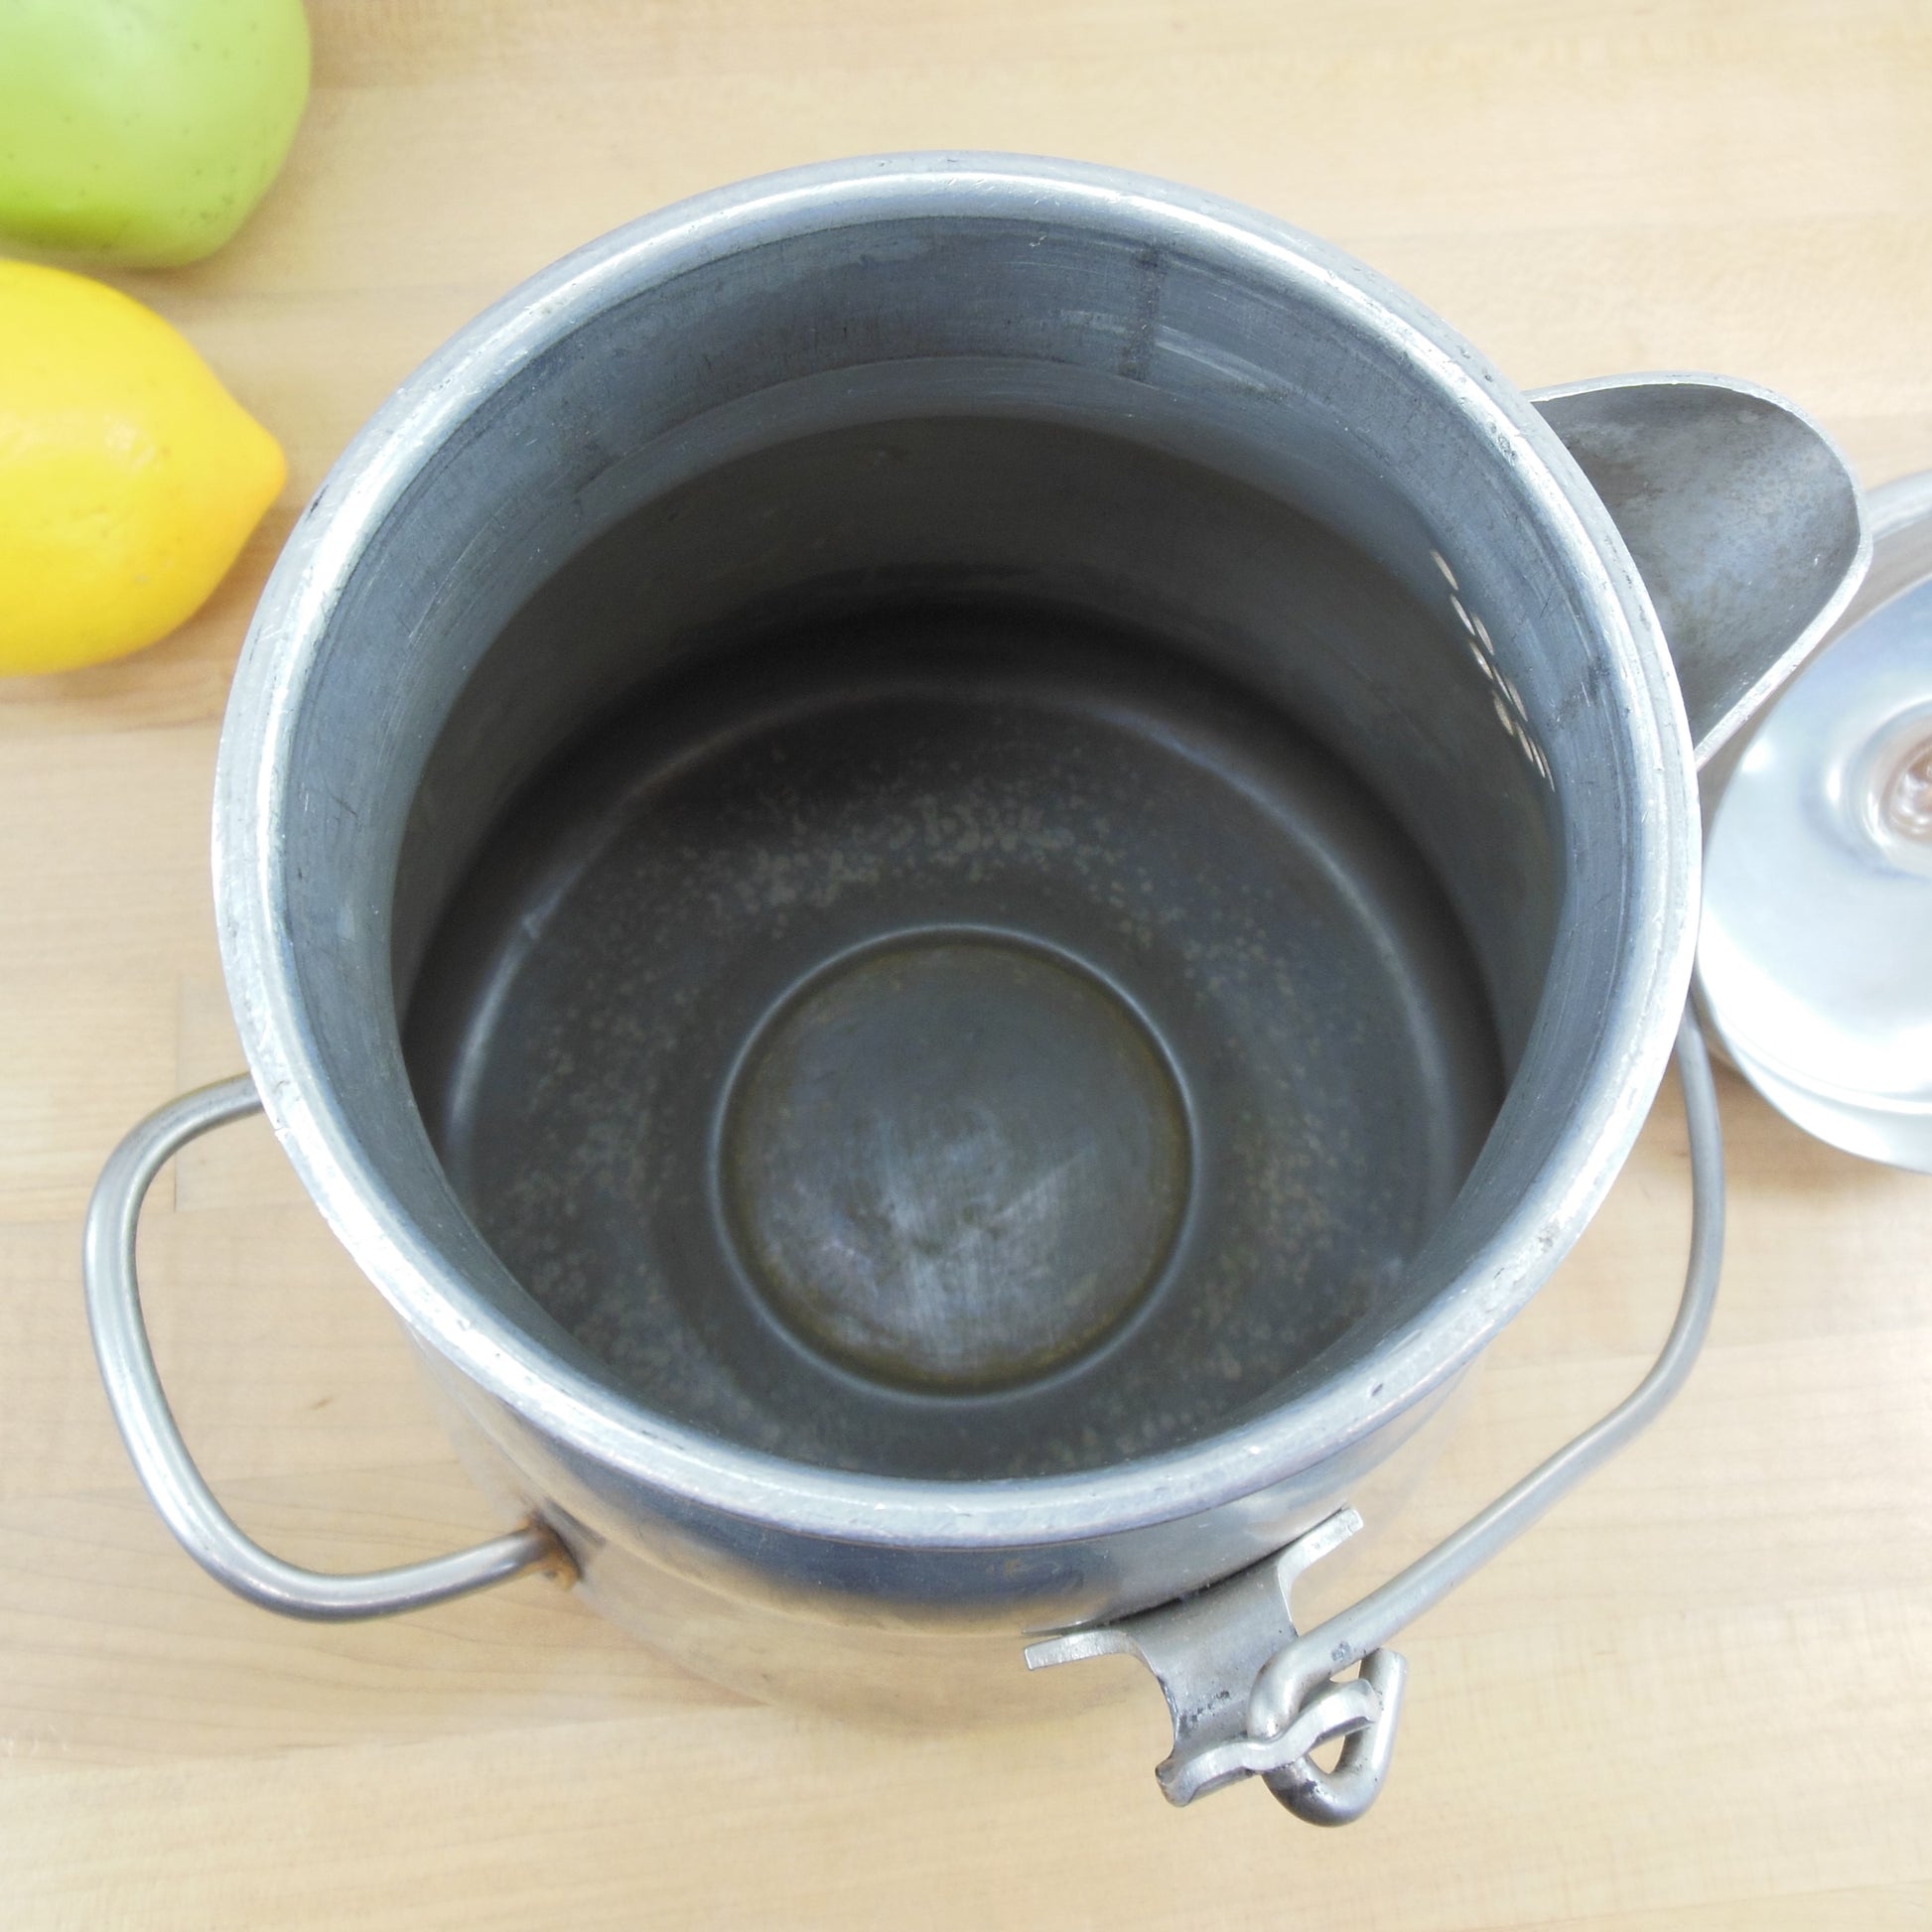 Wear Ever USA No. 3112 Aluminum Coffee Percolator Pot - No Guts Inset Used